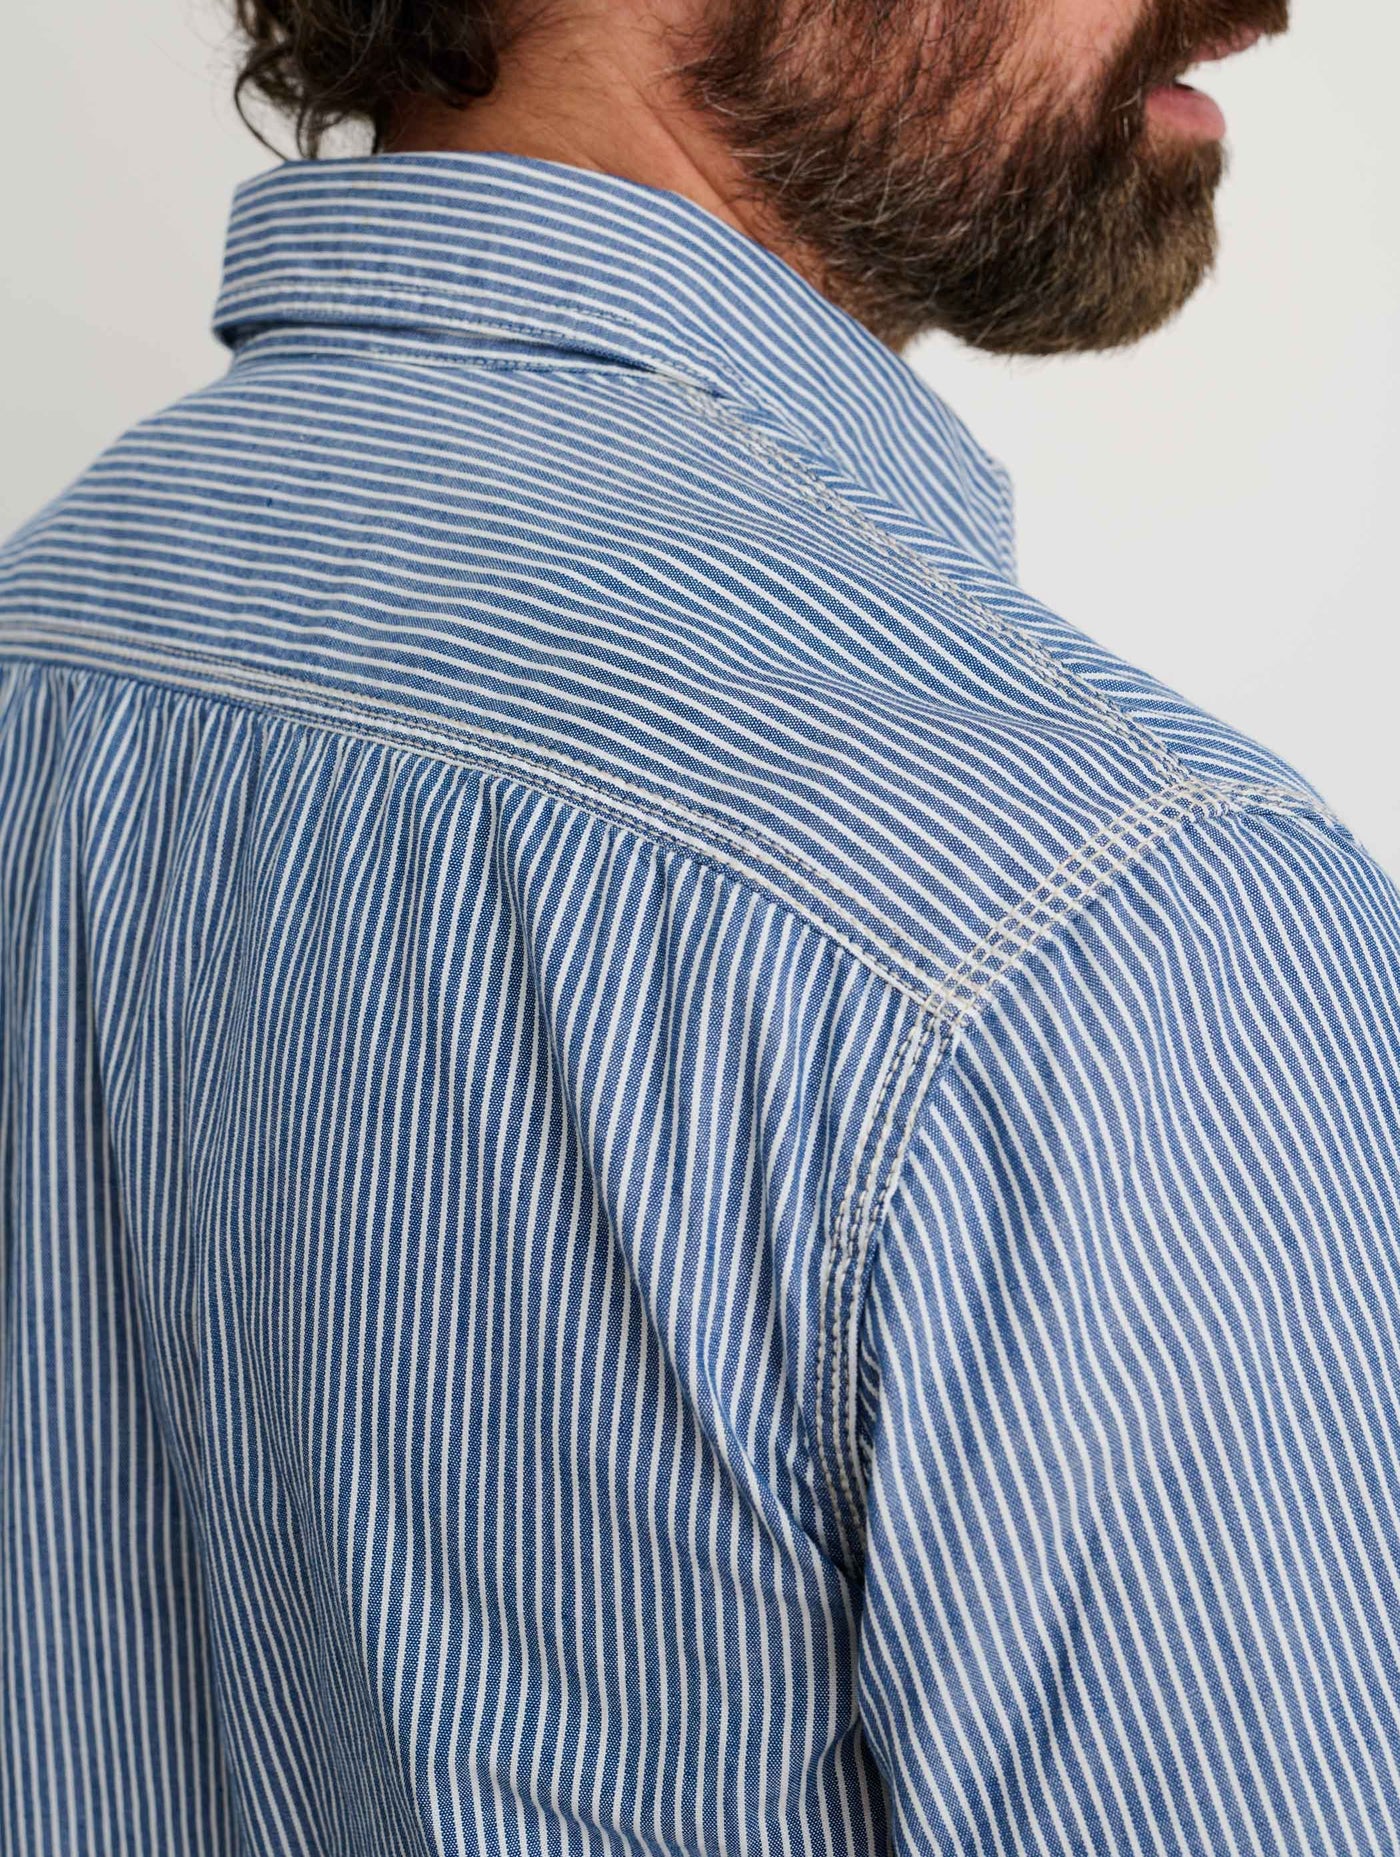 Work Shirt in Stripe